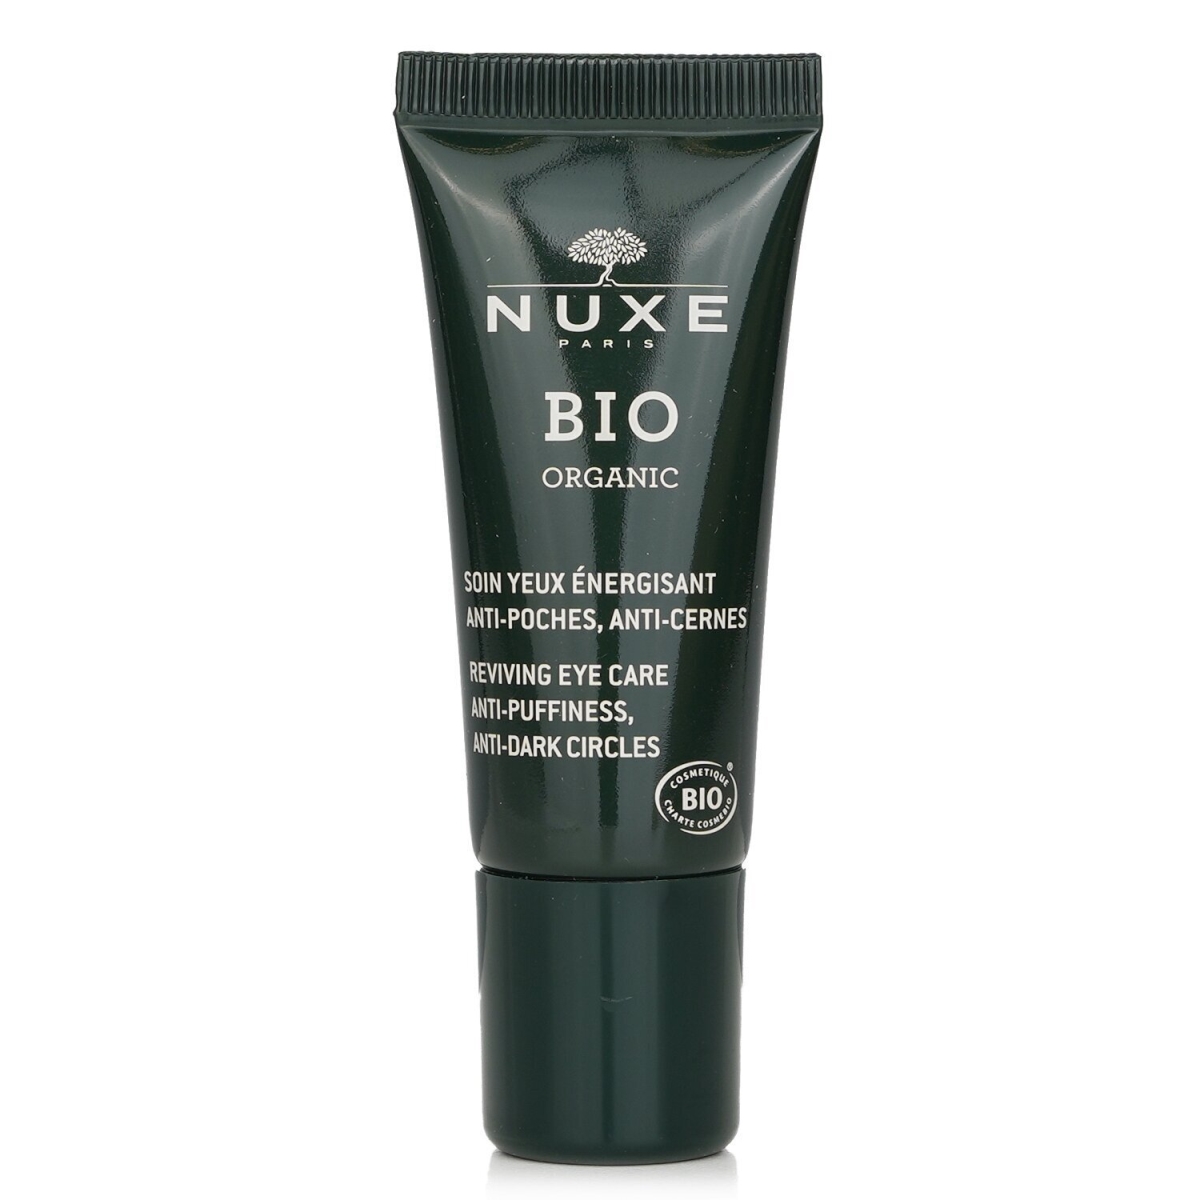 Picture of Nuxe 301120 15 ml Bio Organic Anti-Puffiness & Anti-Dark Circles Reviving Eye Care